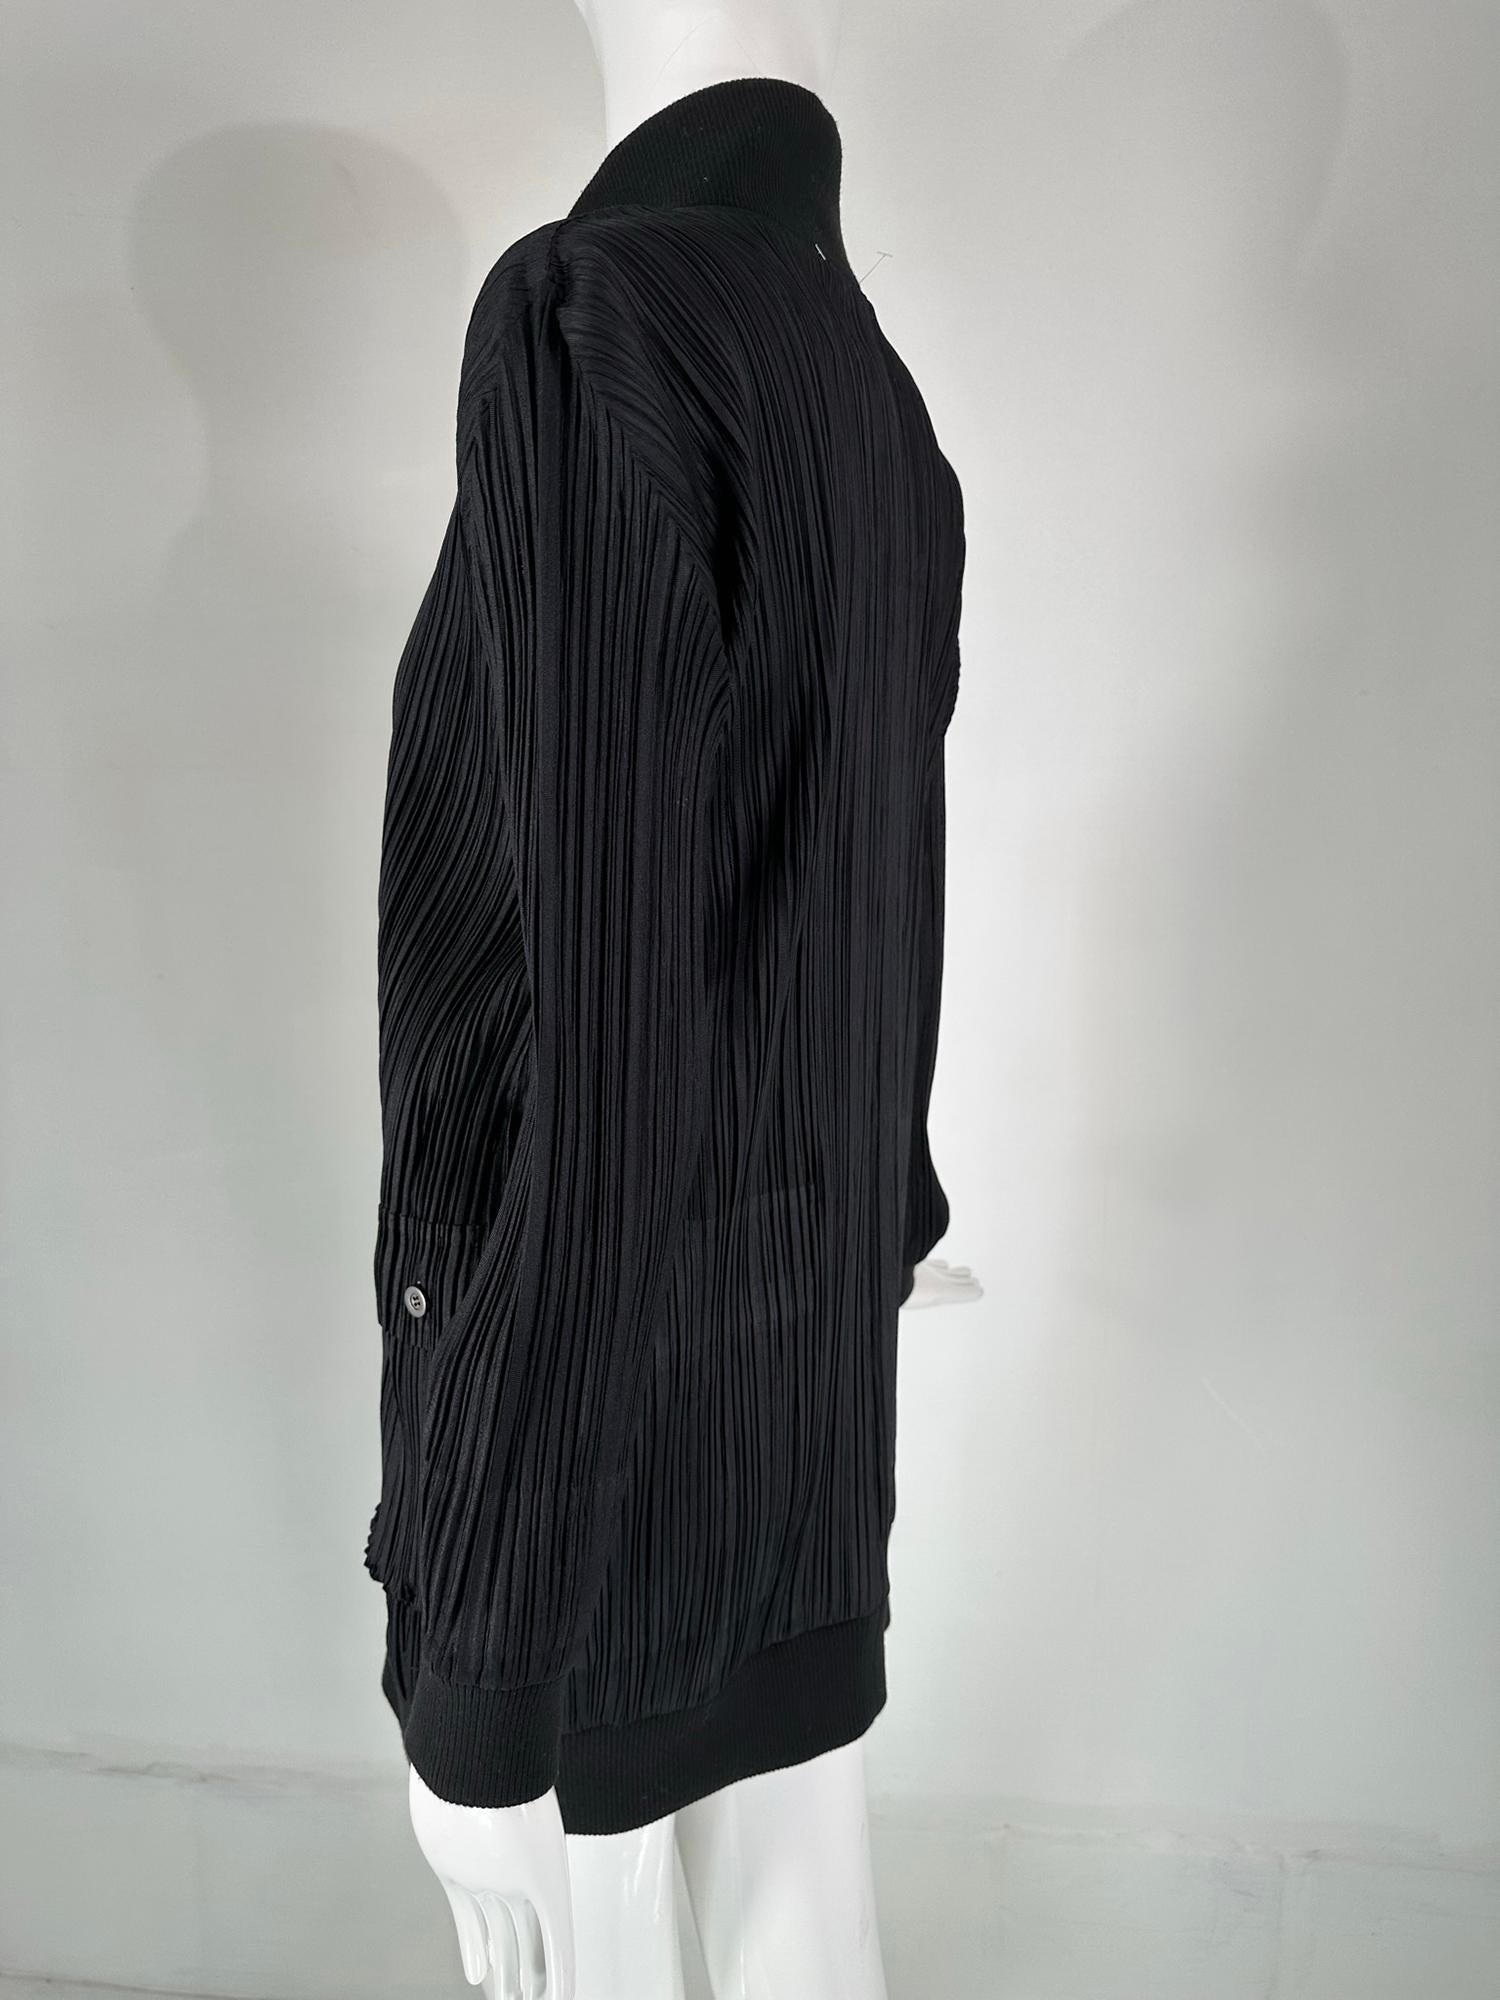 Issey Miyake Pleats Please Black Funnel Neck Hidden Zipper Front Long Jacket 3 For Sale 2